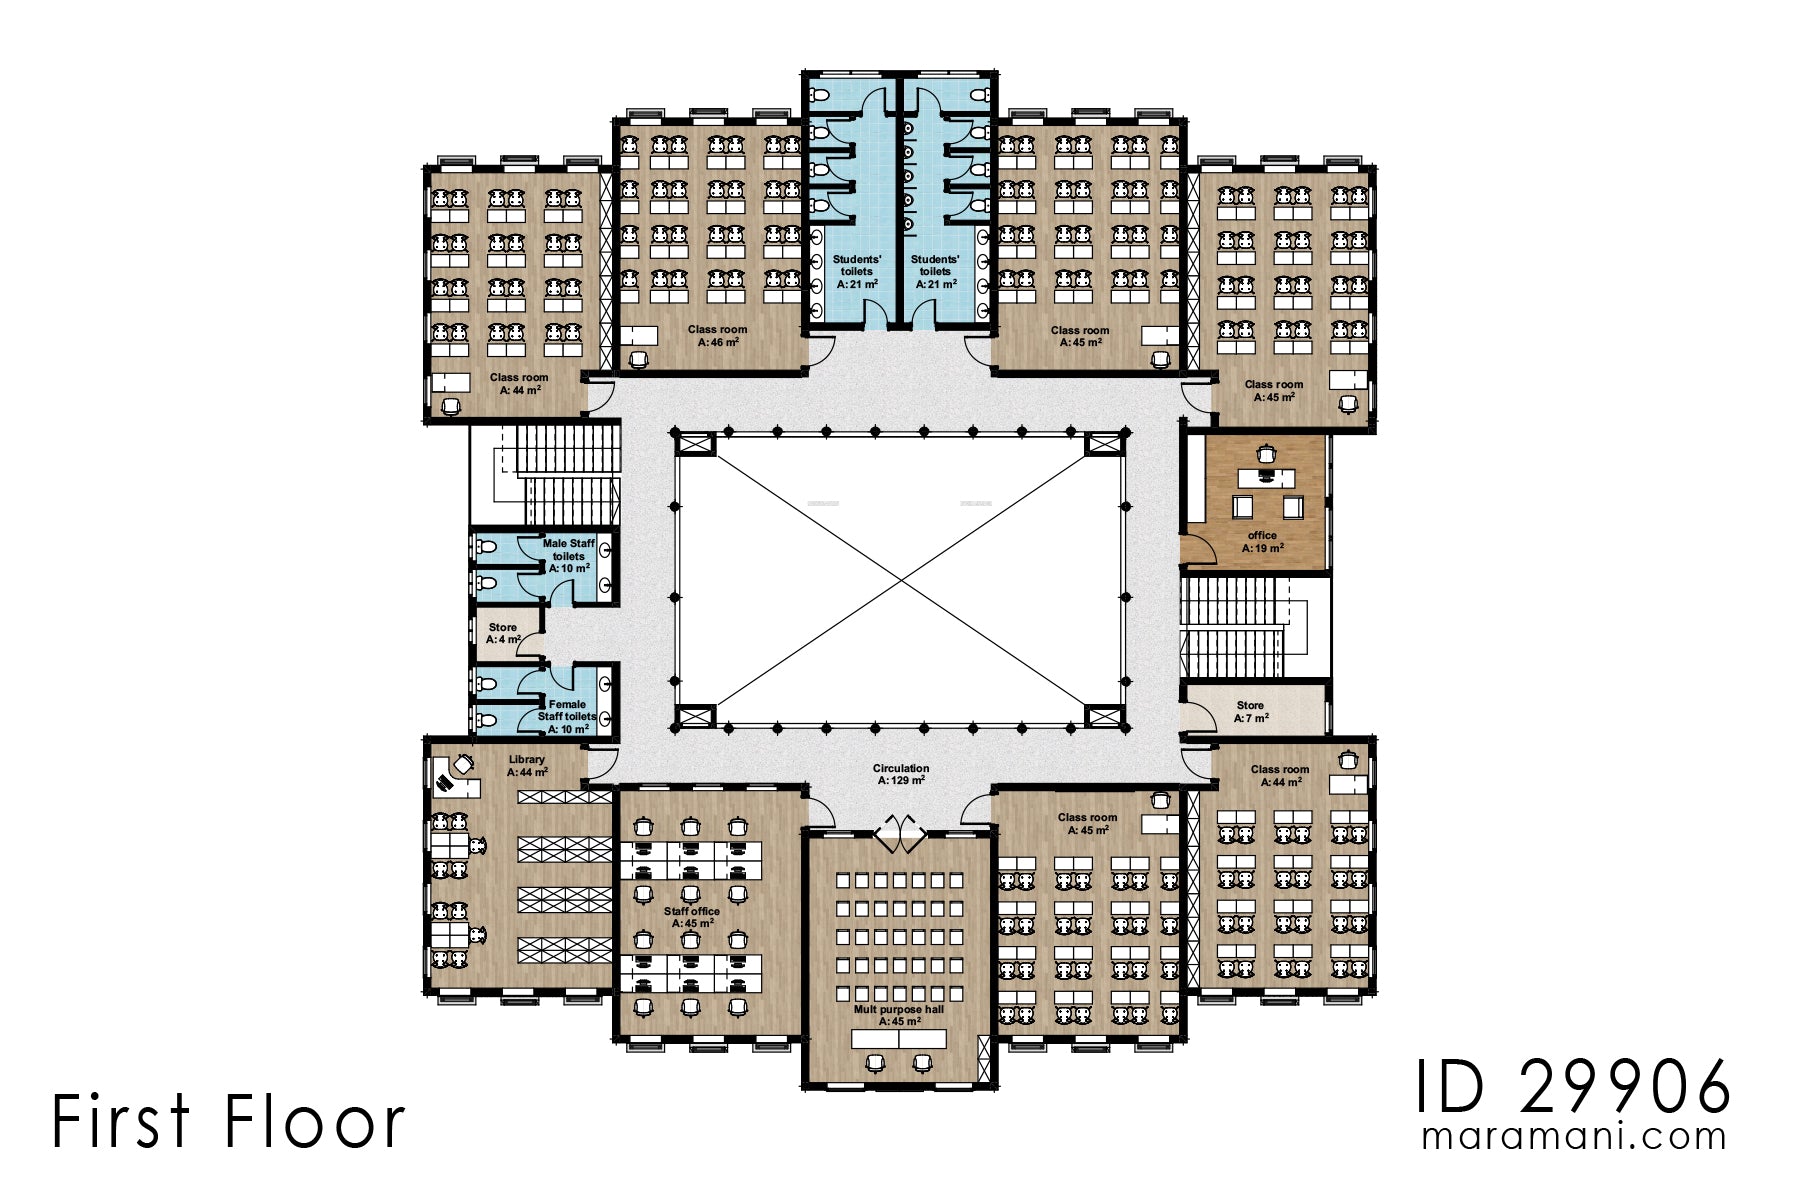 School Building Design - ID 29906